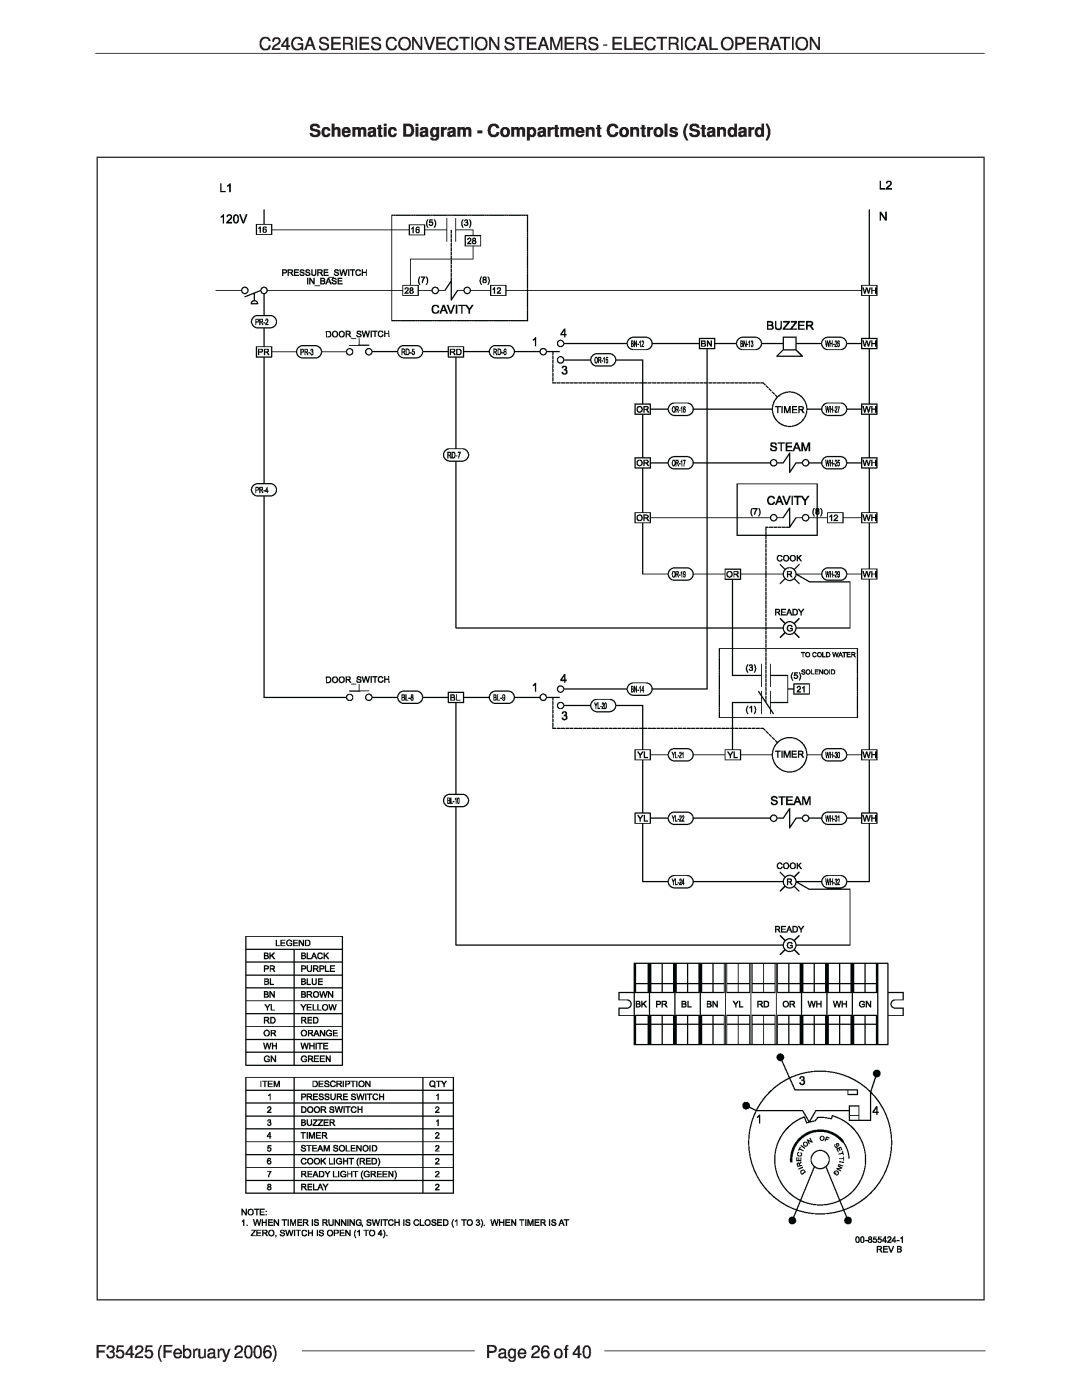 Vulcan-Hart C24GA6, C24GA10, ML-136021, ML-136022 Schematic Diagram - Compartment Controls Standard, F35425 February 